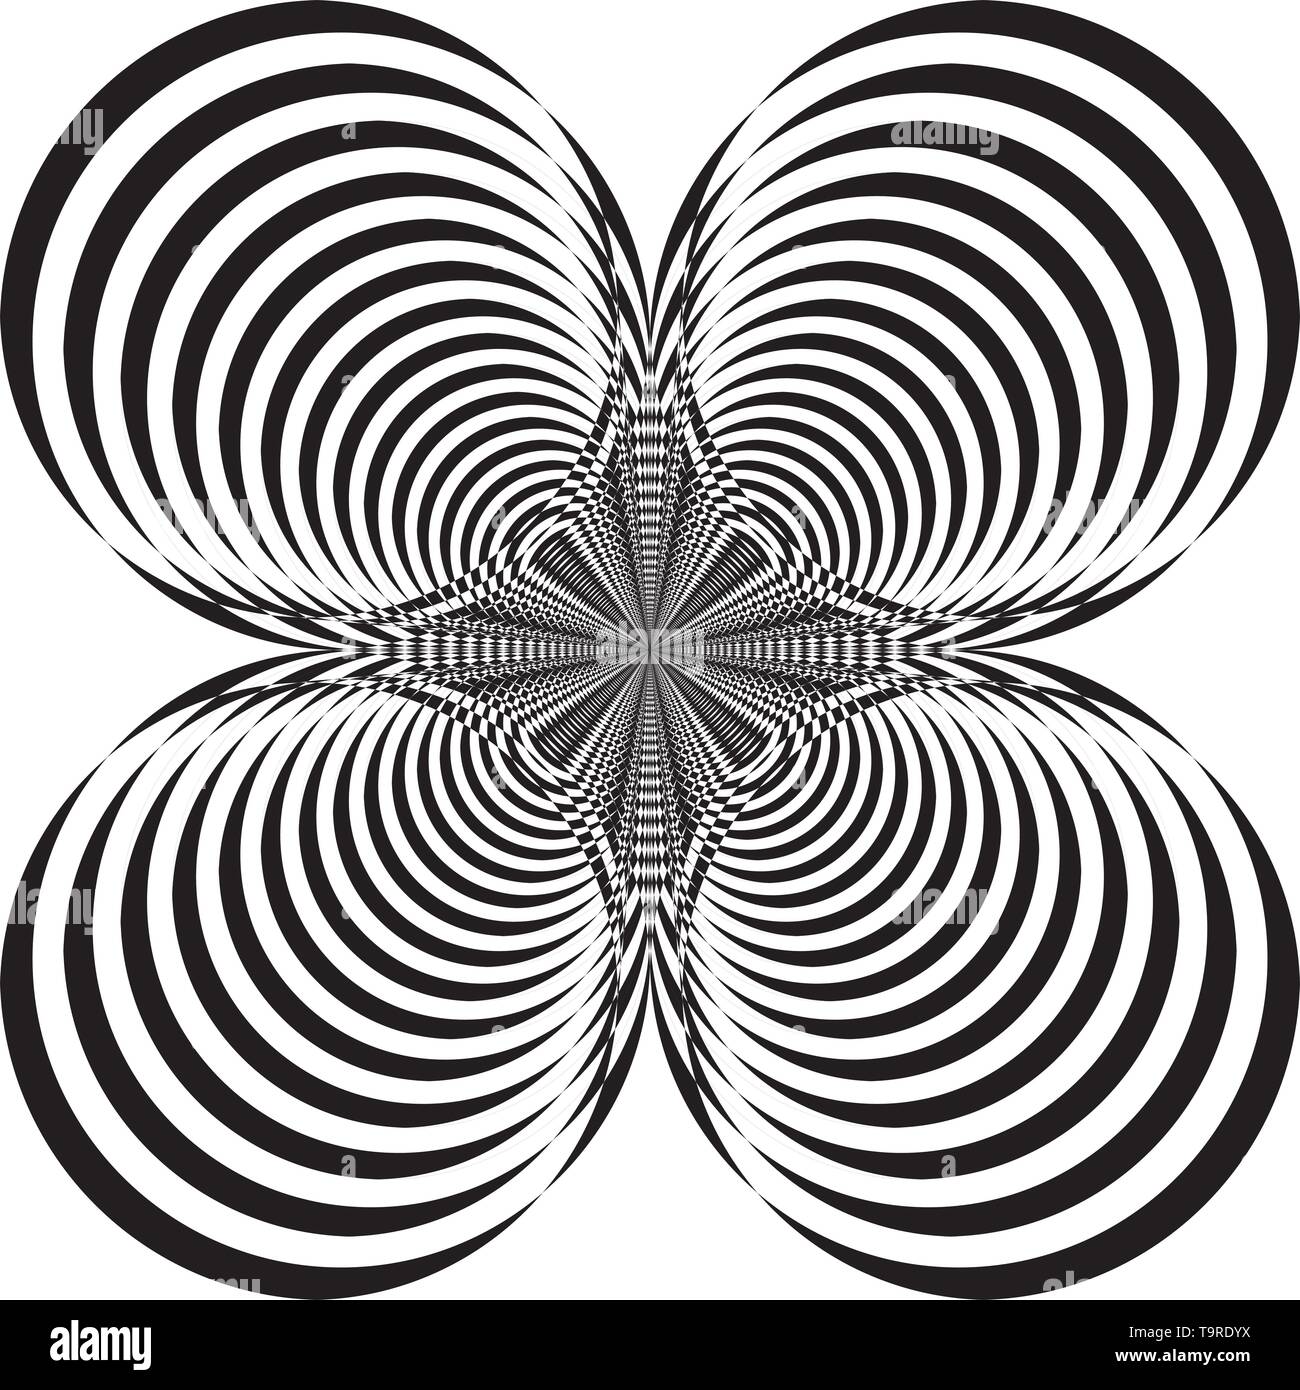 Arabesque pseudo dreidimensionalen vier Kreise Marina wave Zielstruktur Illusion auf transparentem Hintergrund arabesque grafik design Stock Vektor